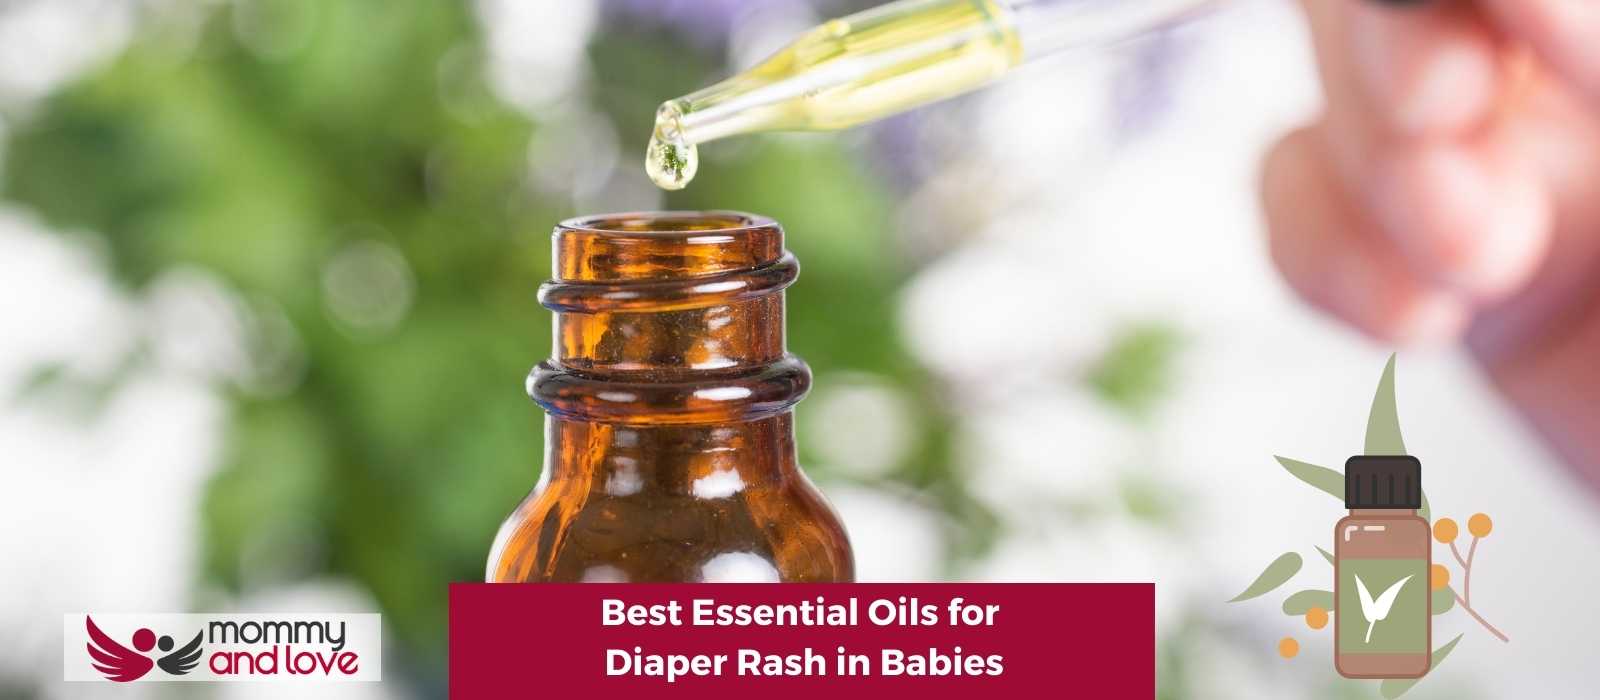 Best Essential Oils for Diaper Rash in Babies